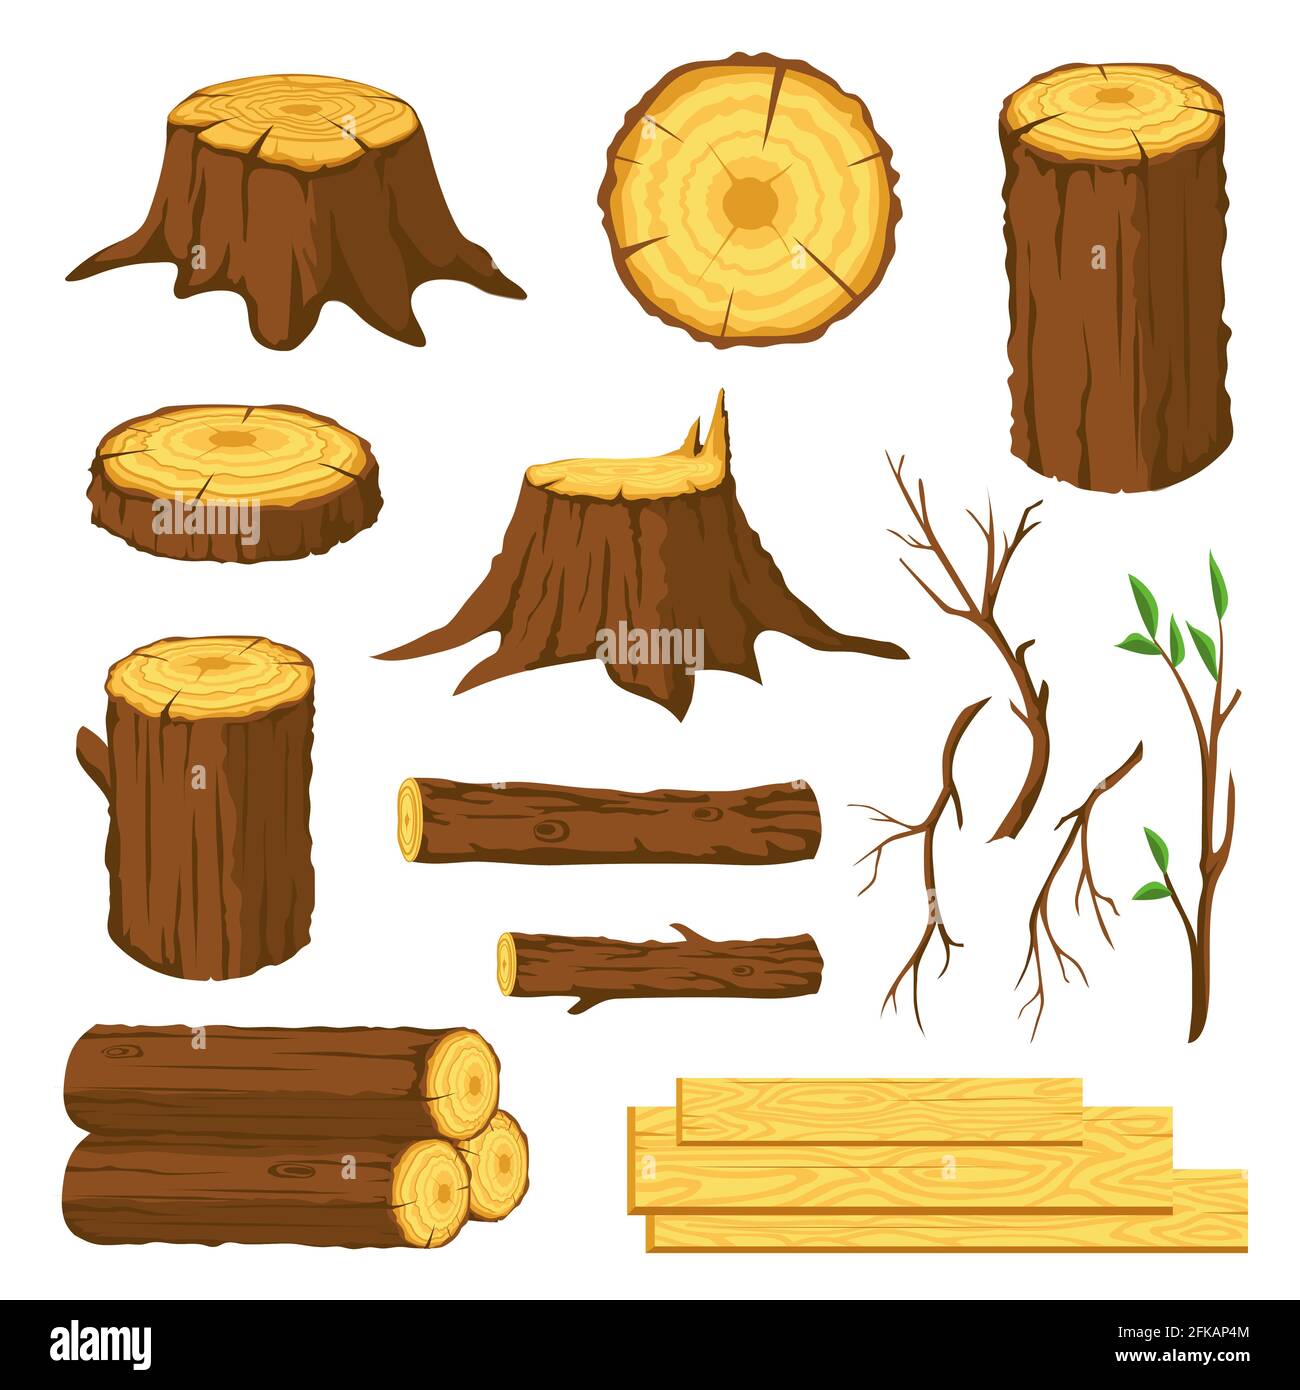 Holzstämme. Brennholz, Baumstümpfe mit Ringen, Stämmen, Ästen und Zweigen. Holzindustrie Forststoffe. Holzbohlen, Holzvektor-Set Stock Vektor